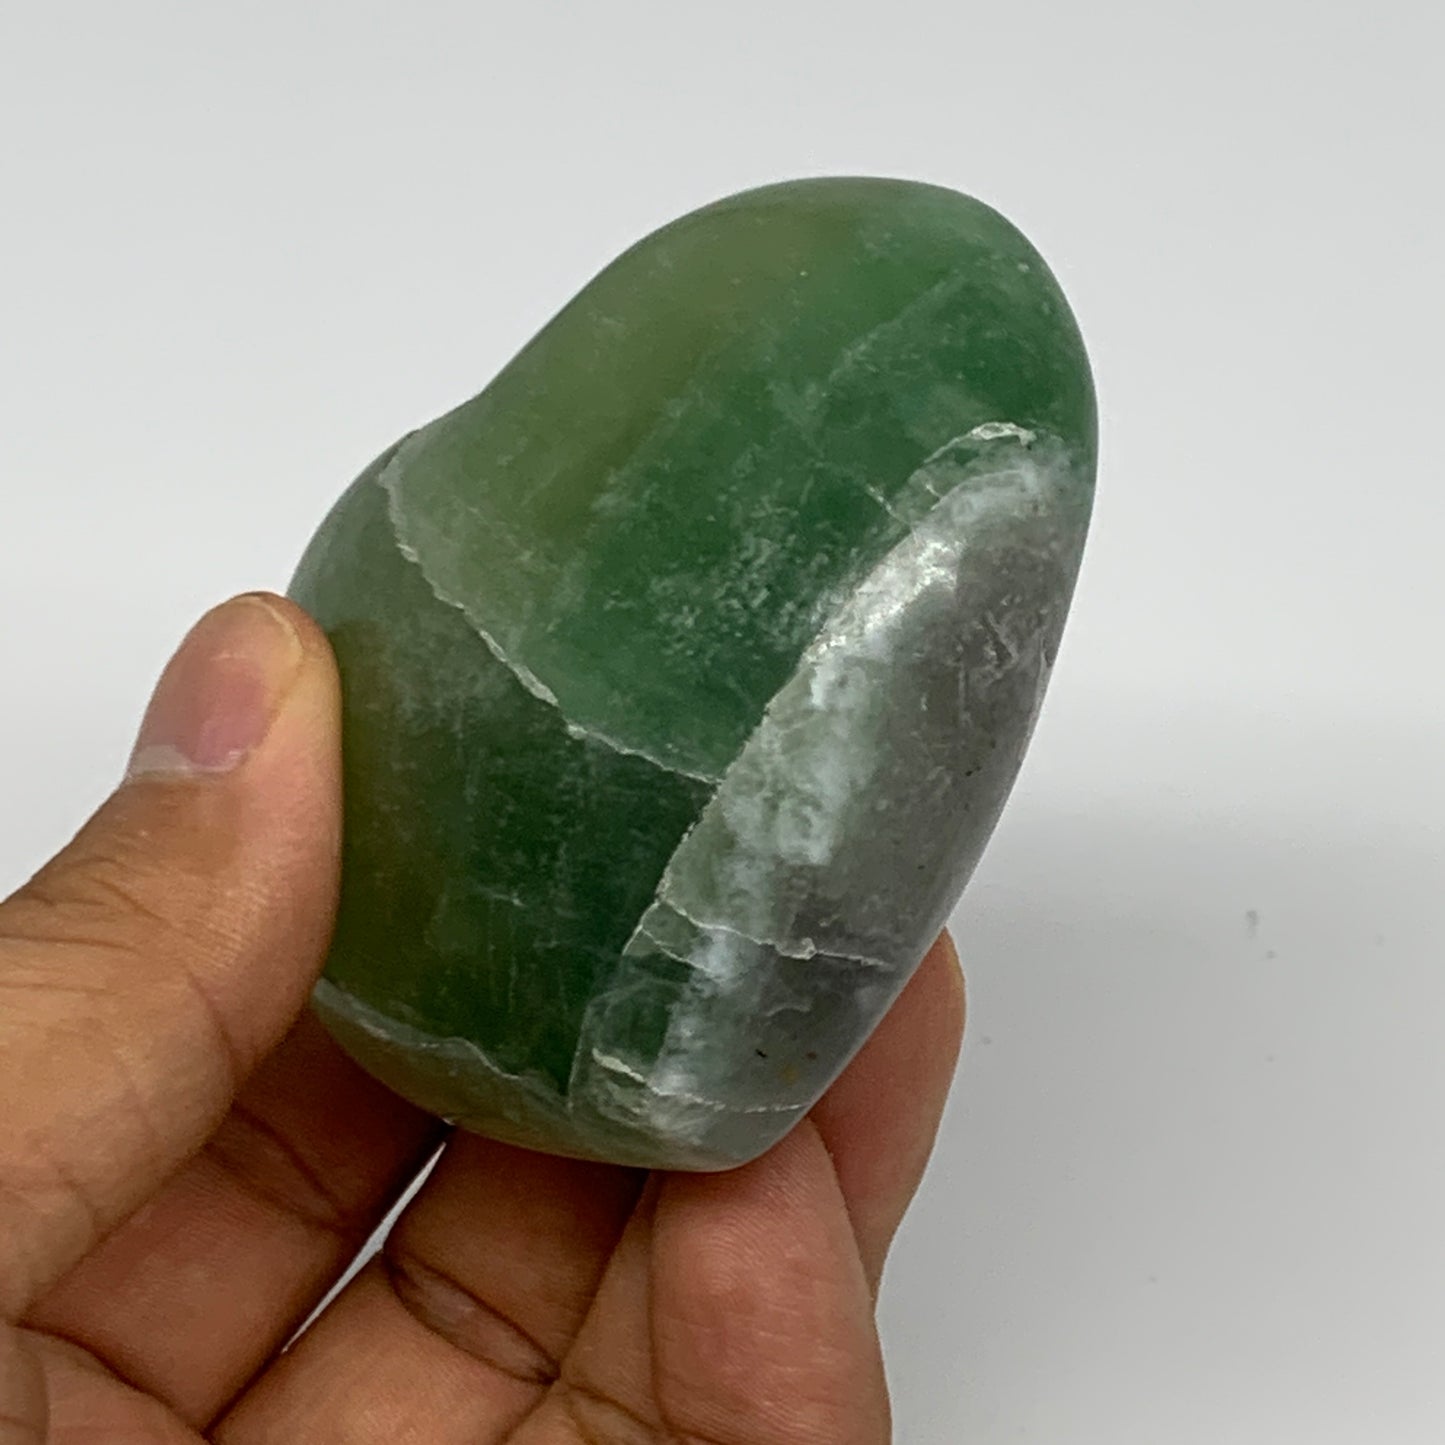 205.3g, 2.3" x 2.8" x 1.2" Fluorite Heart Healing Crystal @Madagascar, B17344